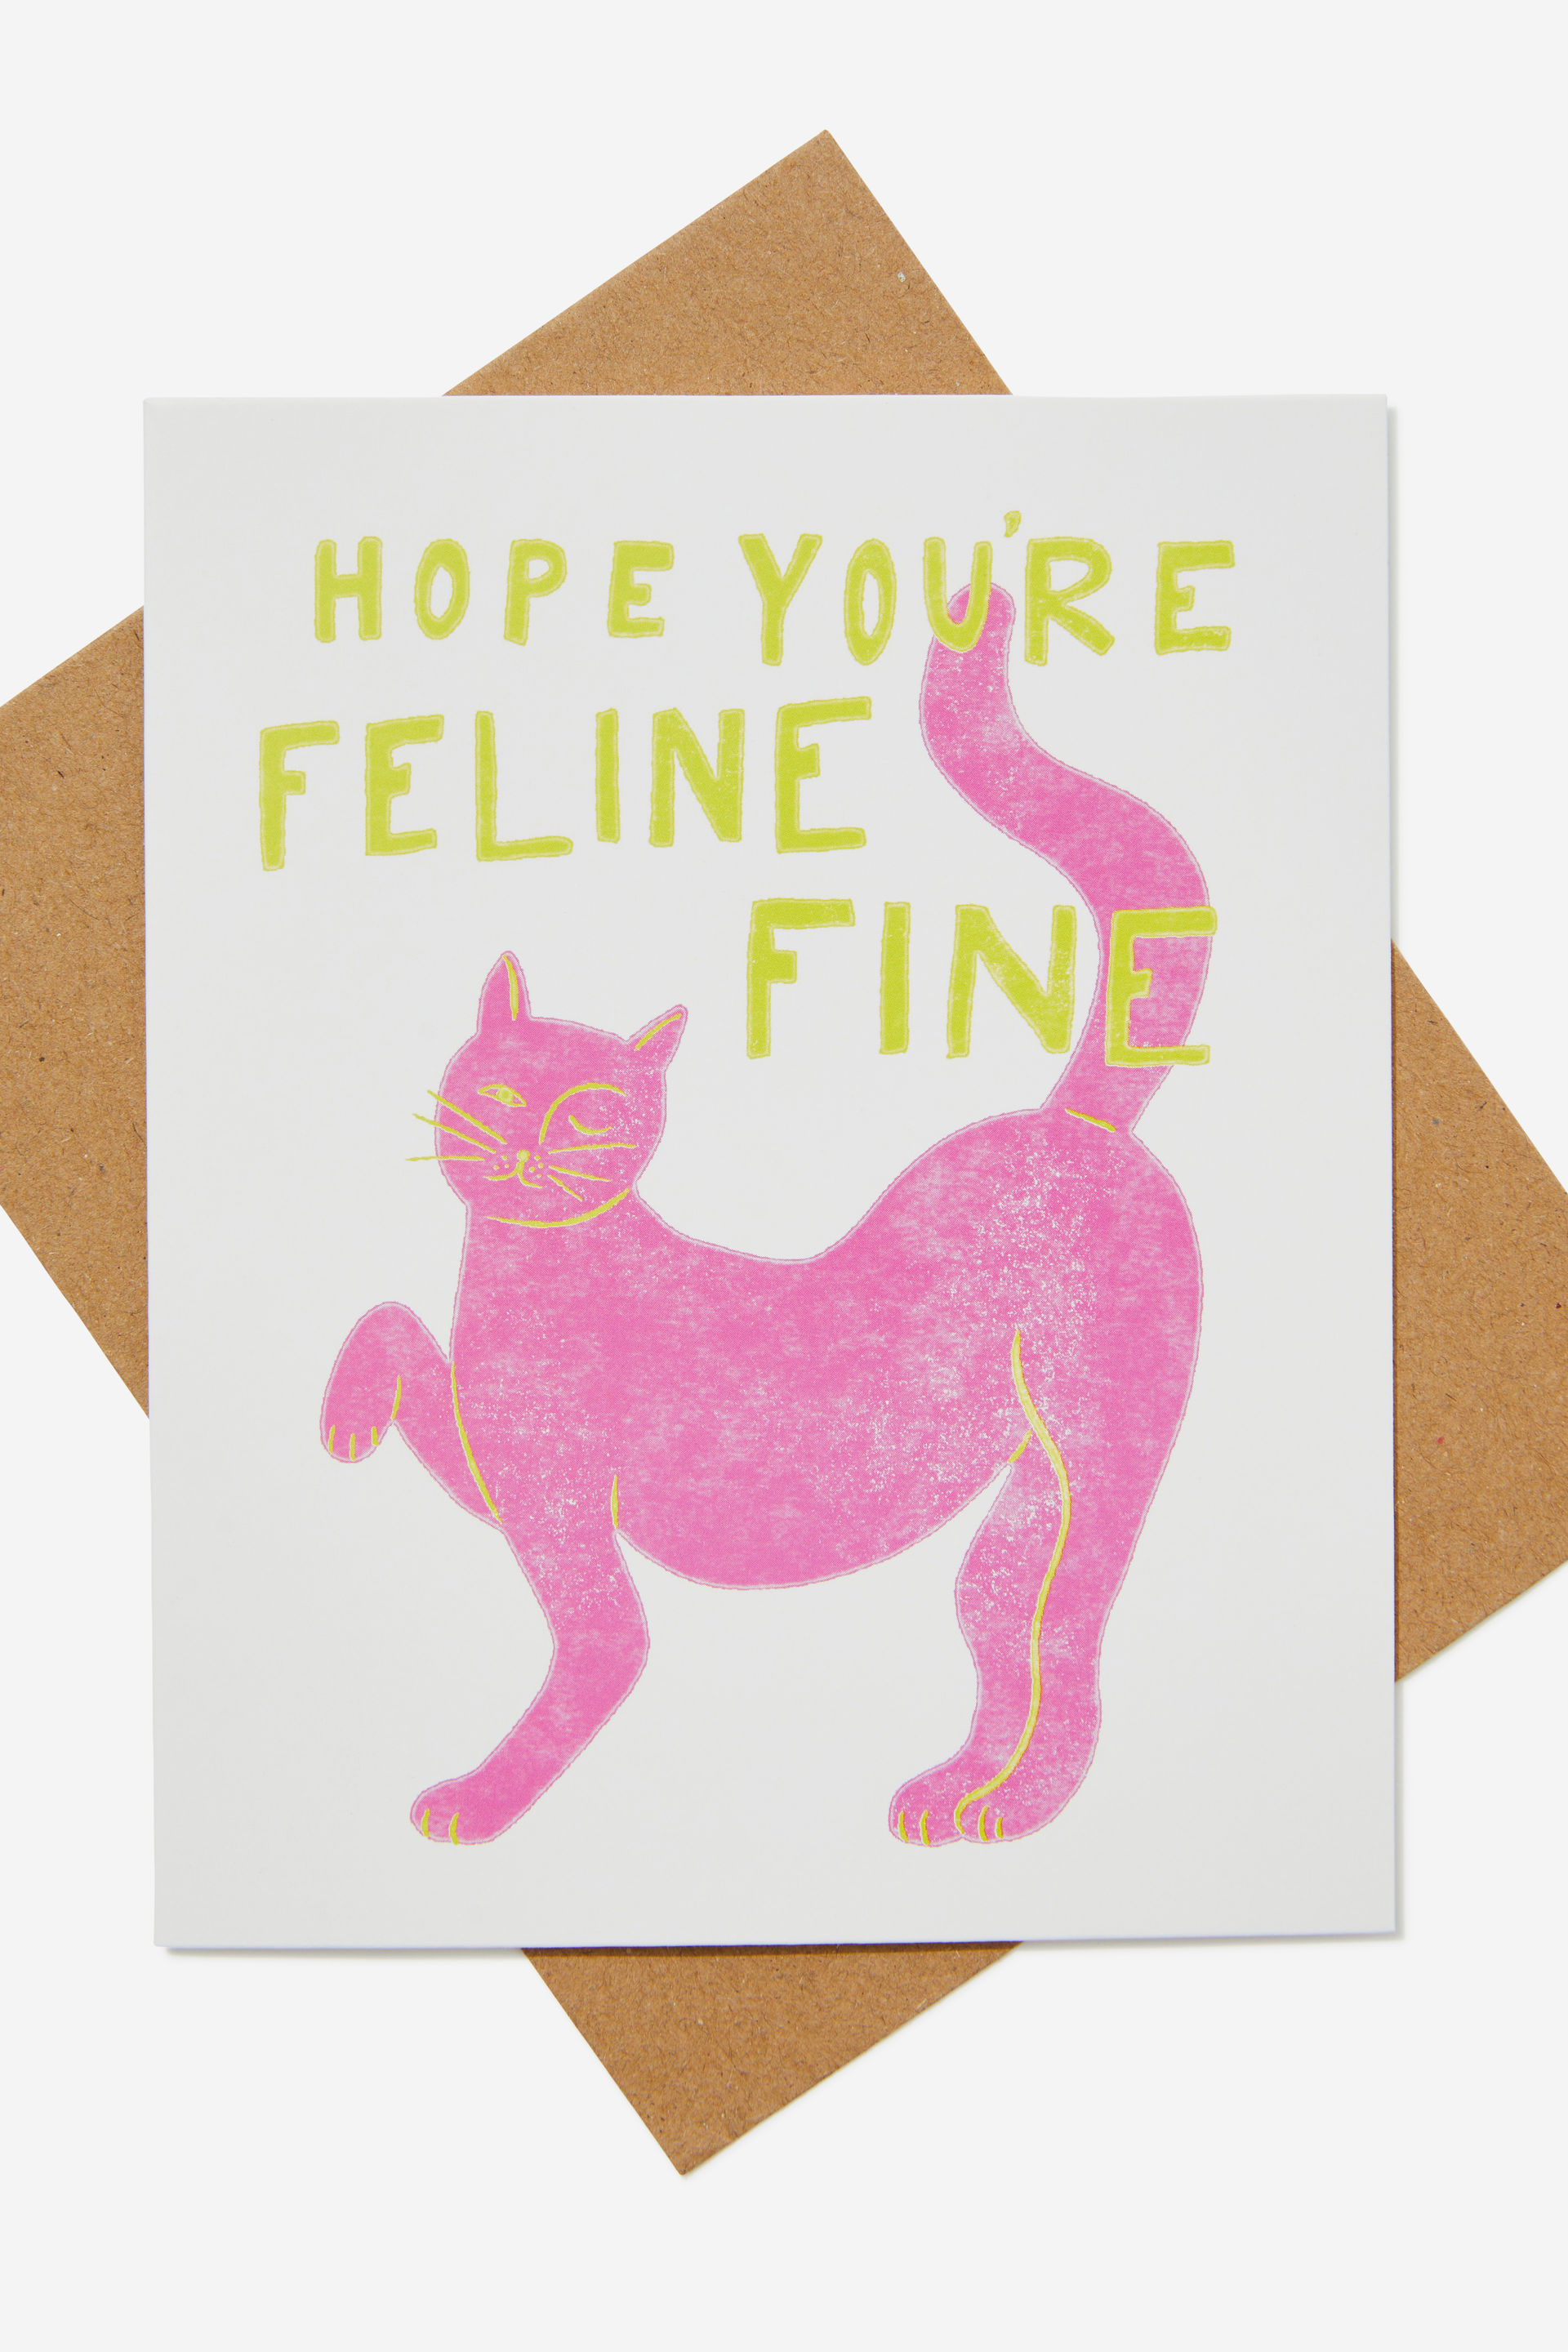 Typo - Nice Birthday Card - Hope you re feline fine